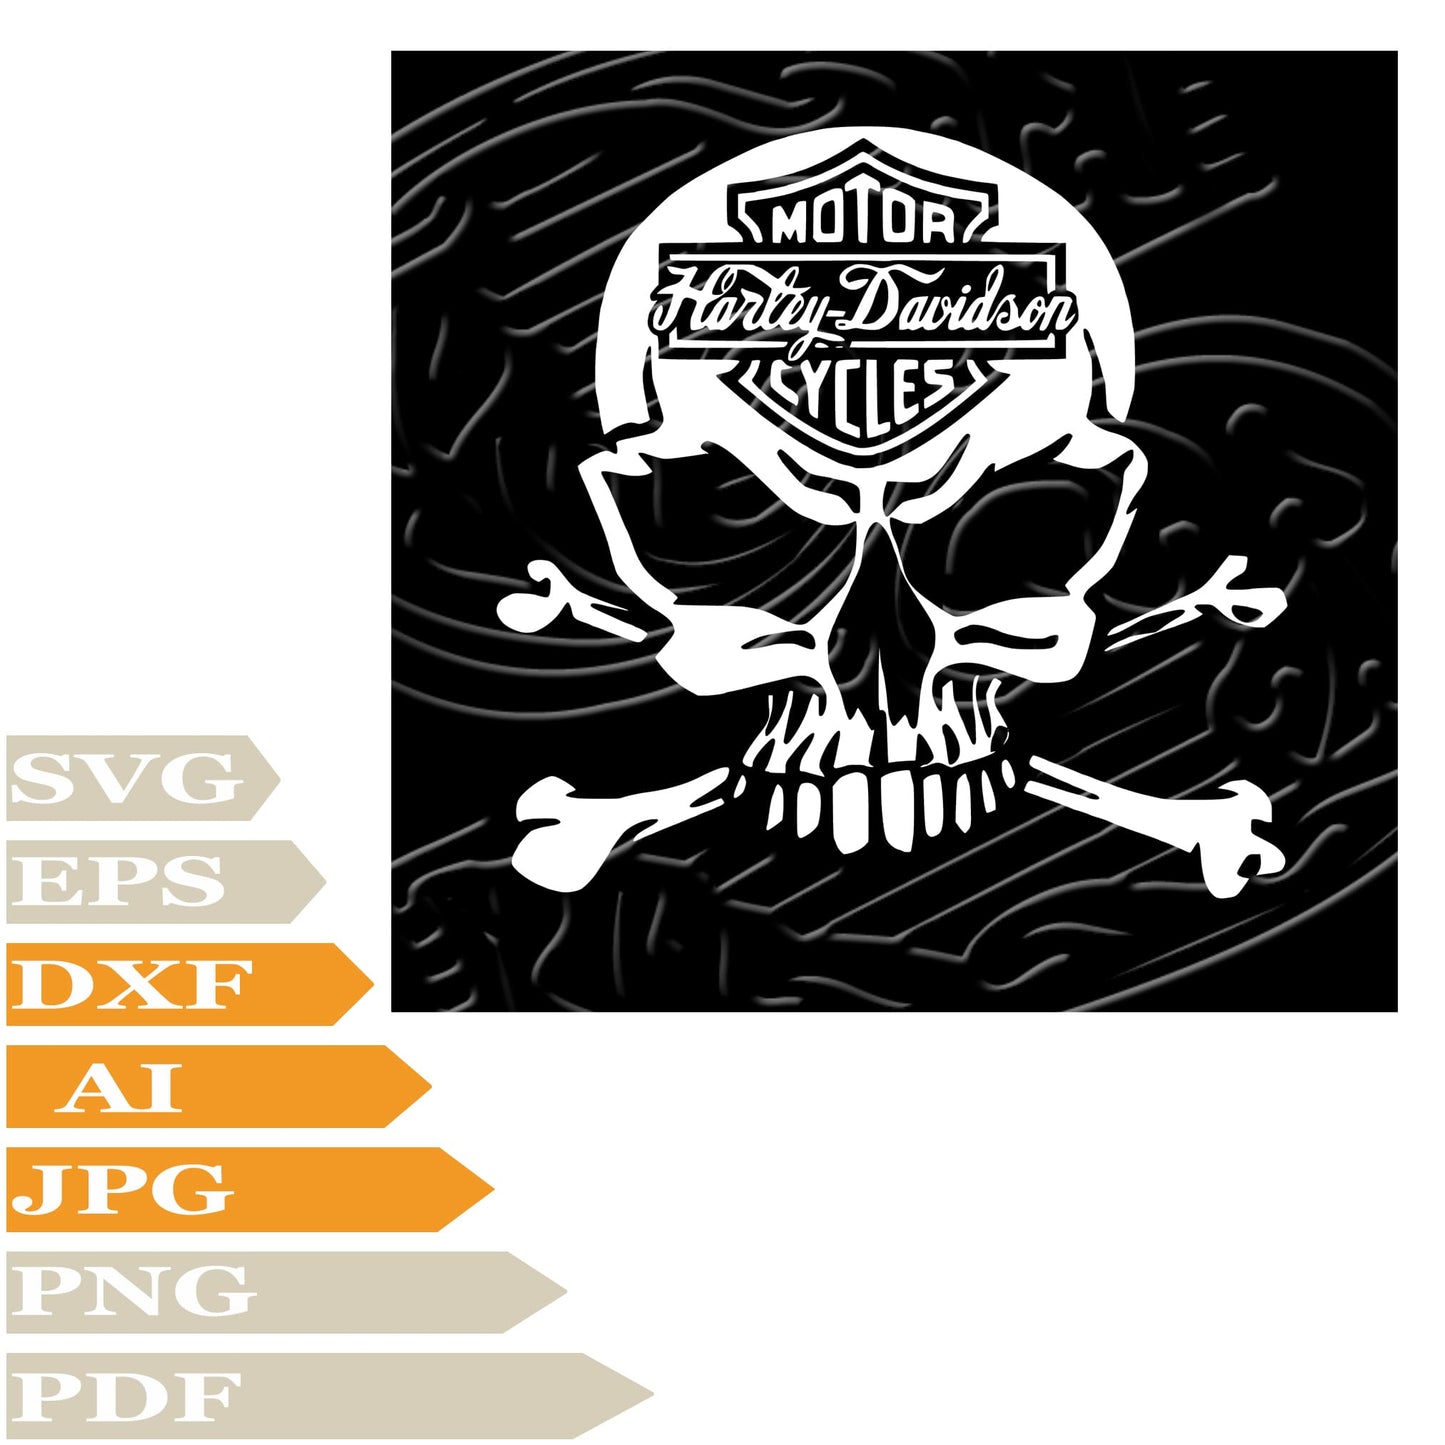 Skull  Harley Davidson,harley Davidson Logo Svg File, Image Cut, Png, For Tattoo, Silhouette, Digital Vector Download, Cut File, Clipart, For Cricut